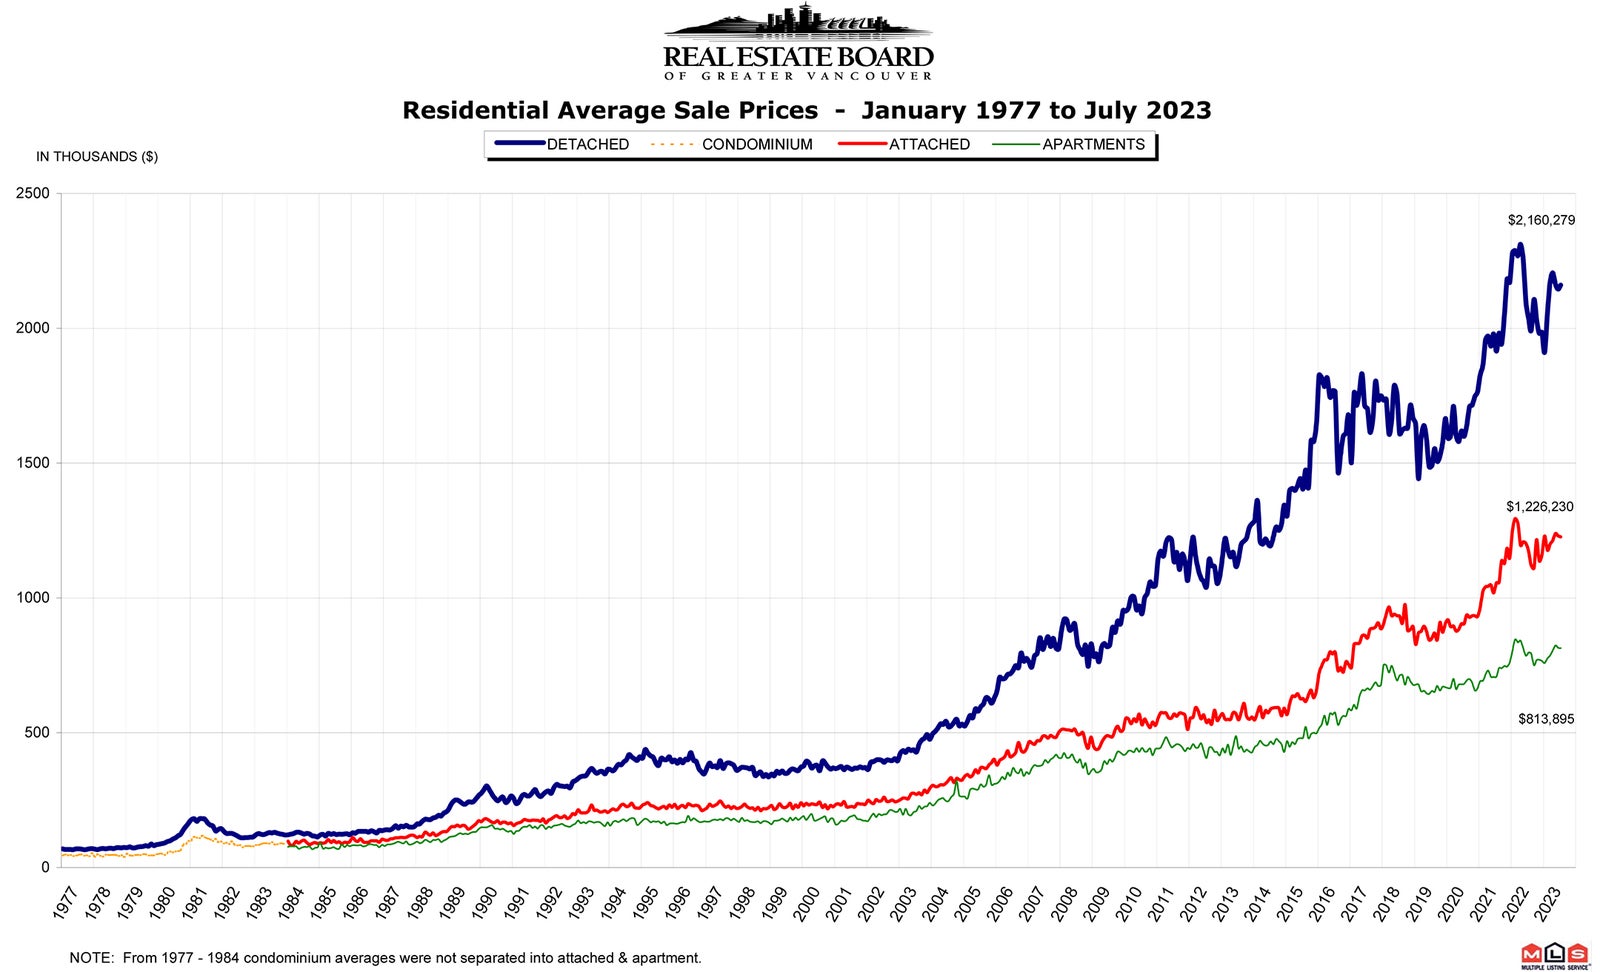 Residential Average Sale Price RASP July 2023 Real Estate Vancouver - Chris Frederickson